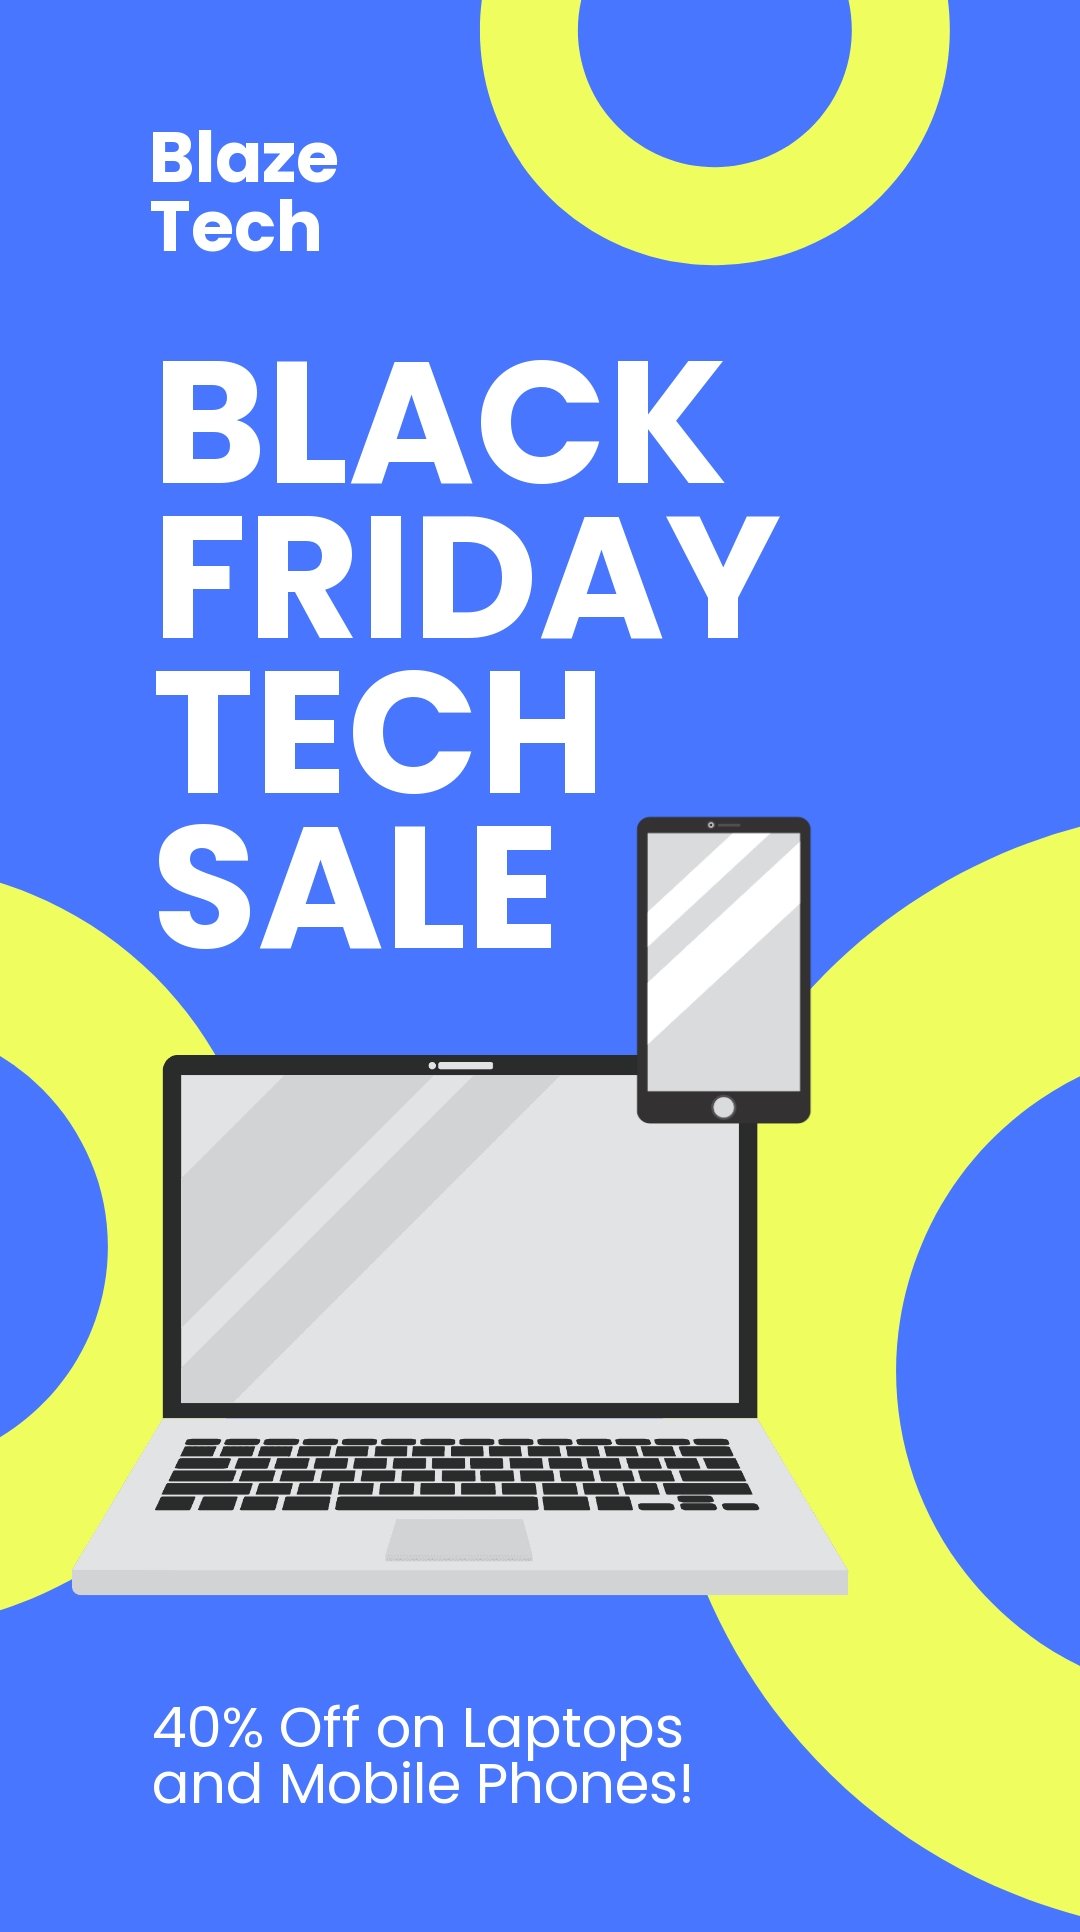 Black Friday Tech Sale Whatsapp Post Template